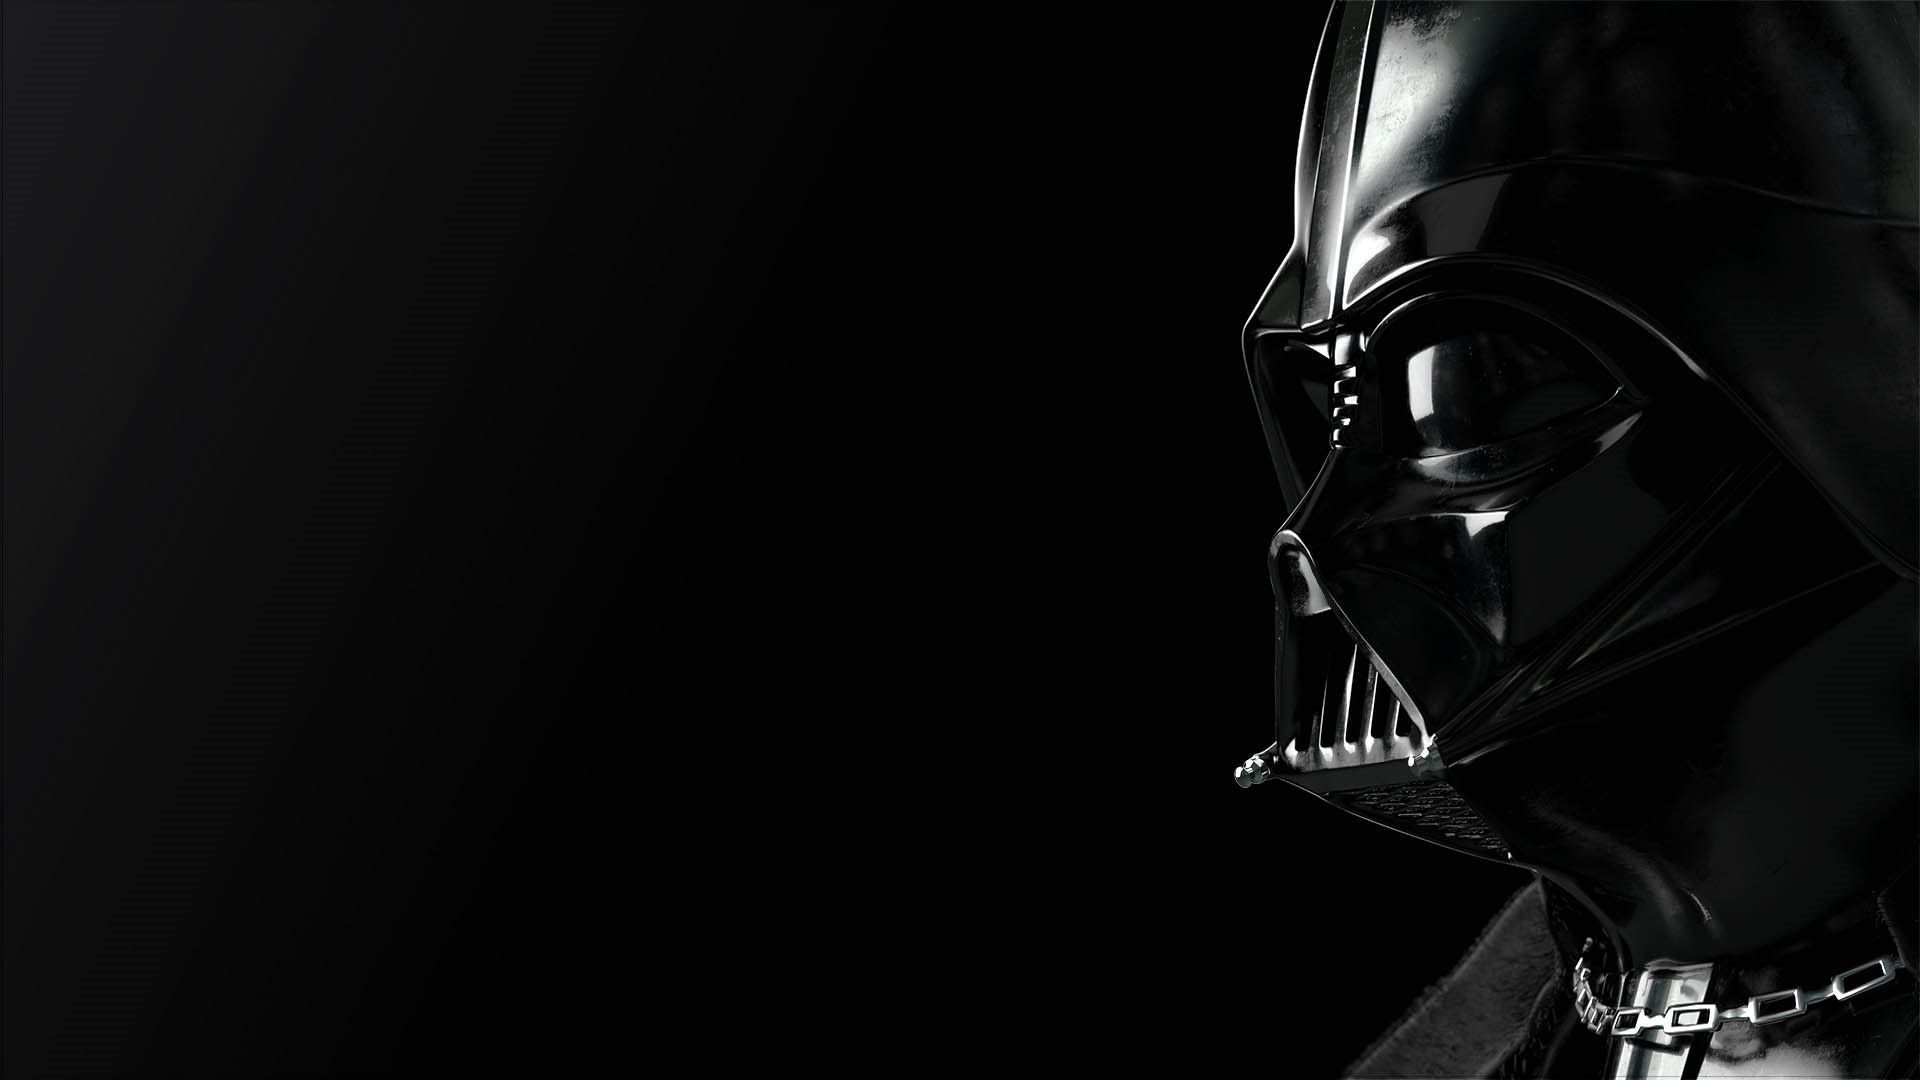 Darth Vader 4k Picture.jpg